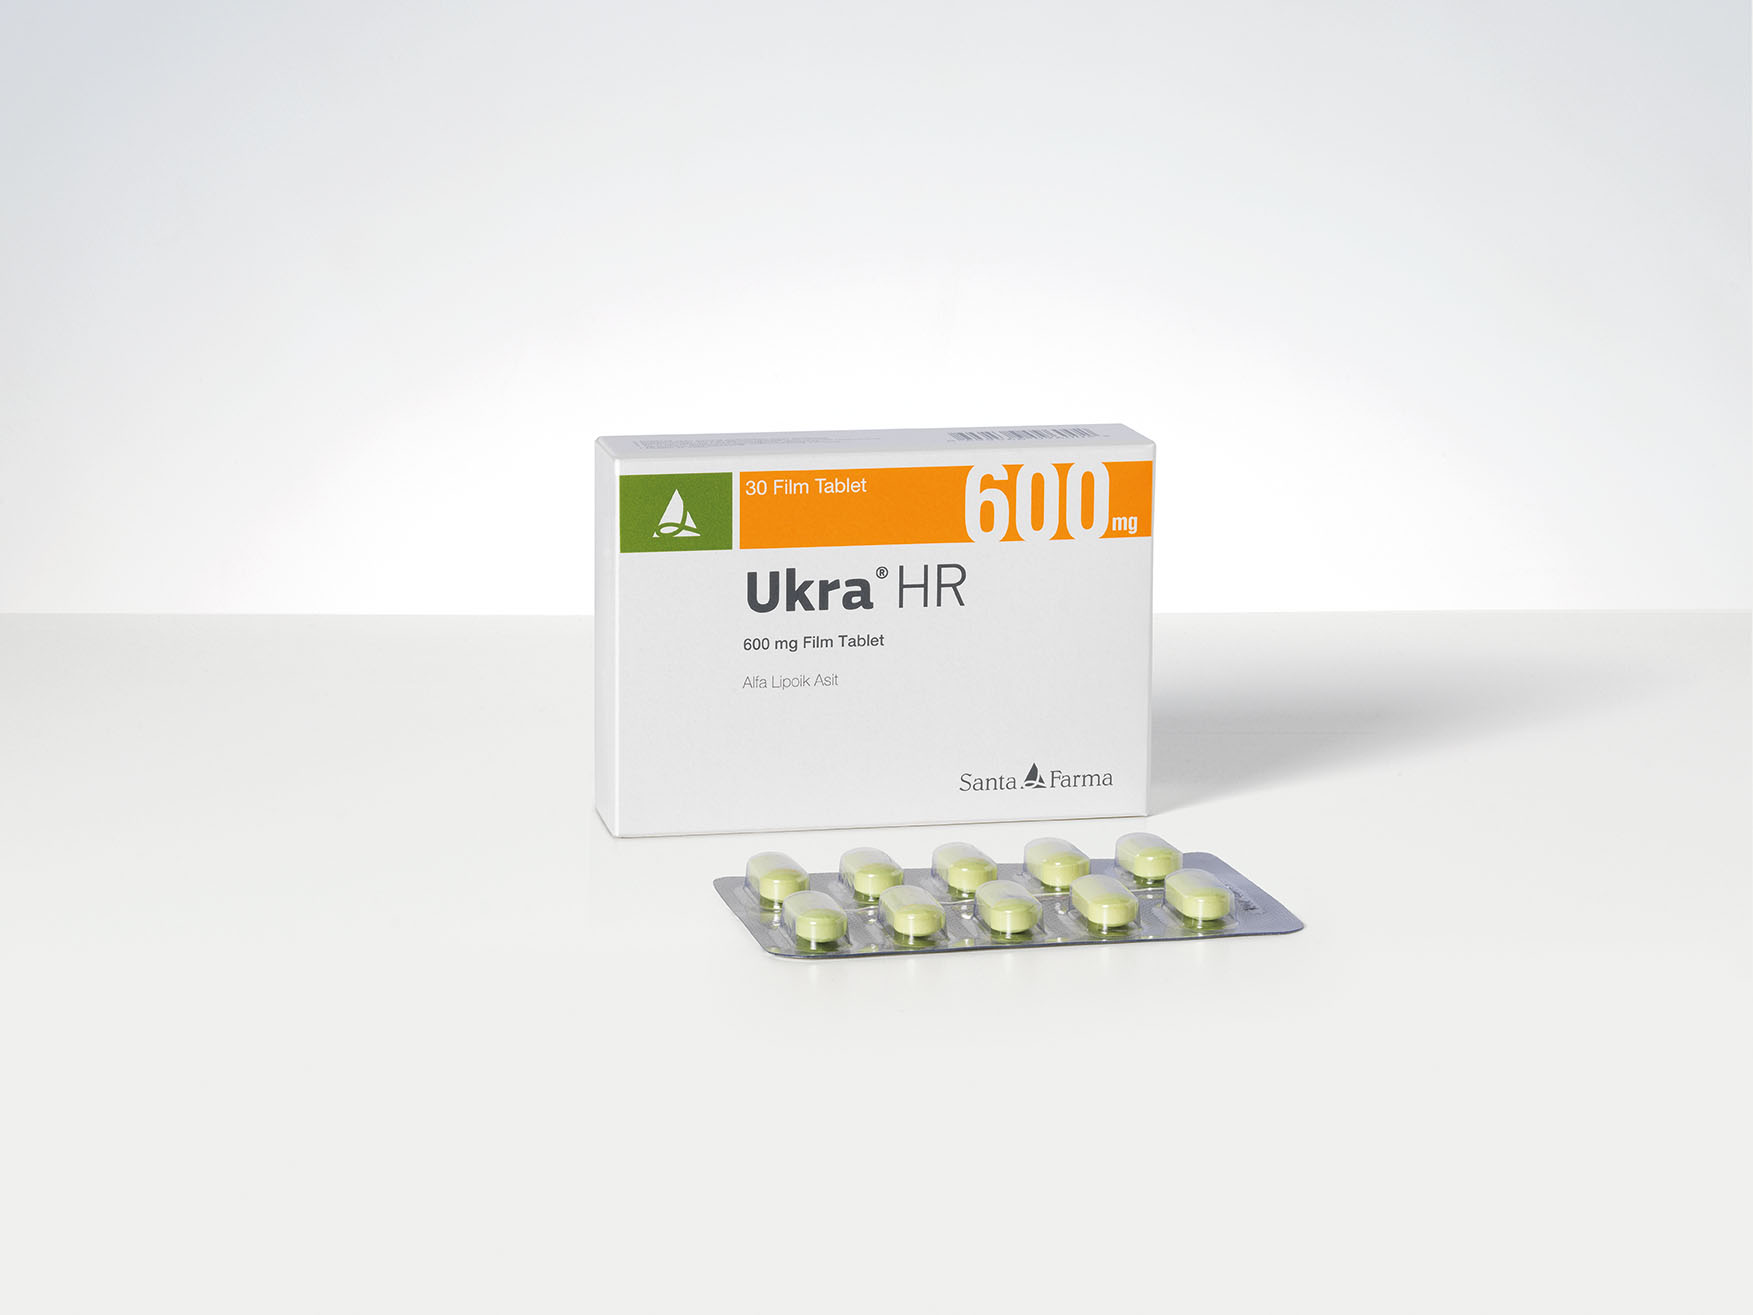 UKRA® HR 600 mg film tablet